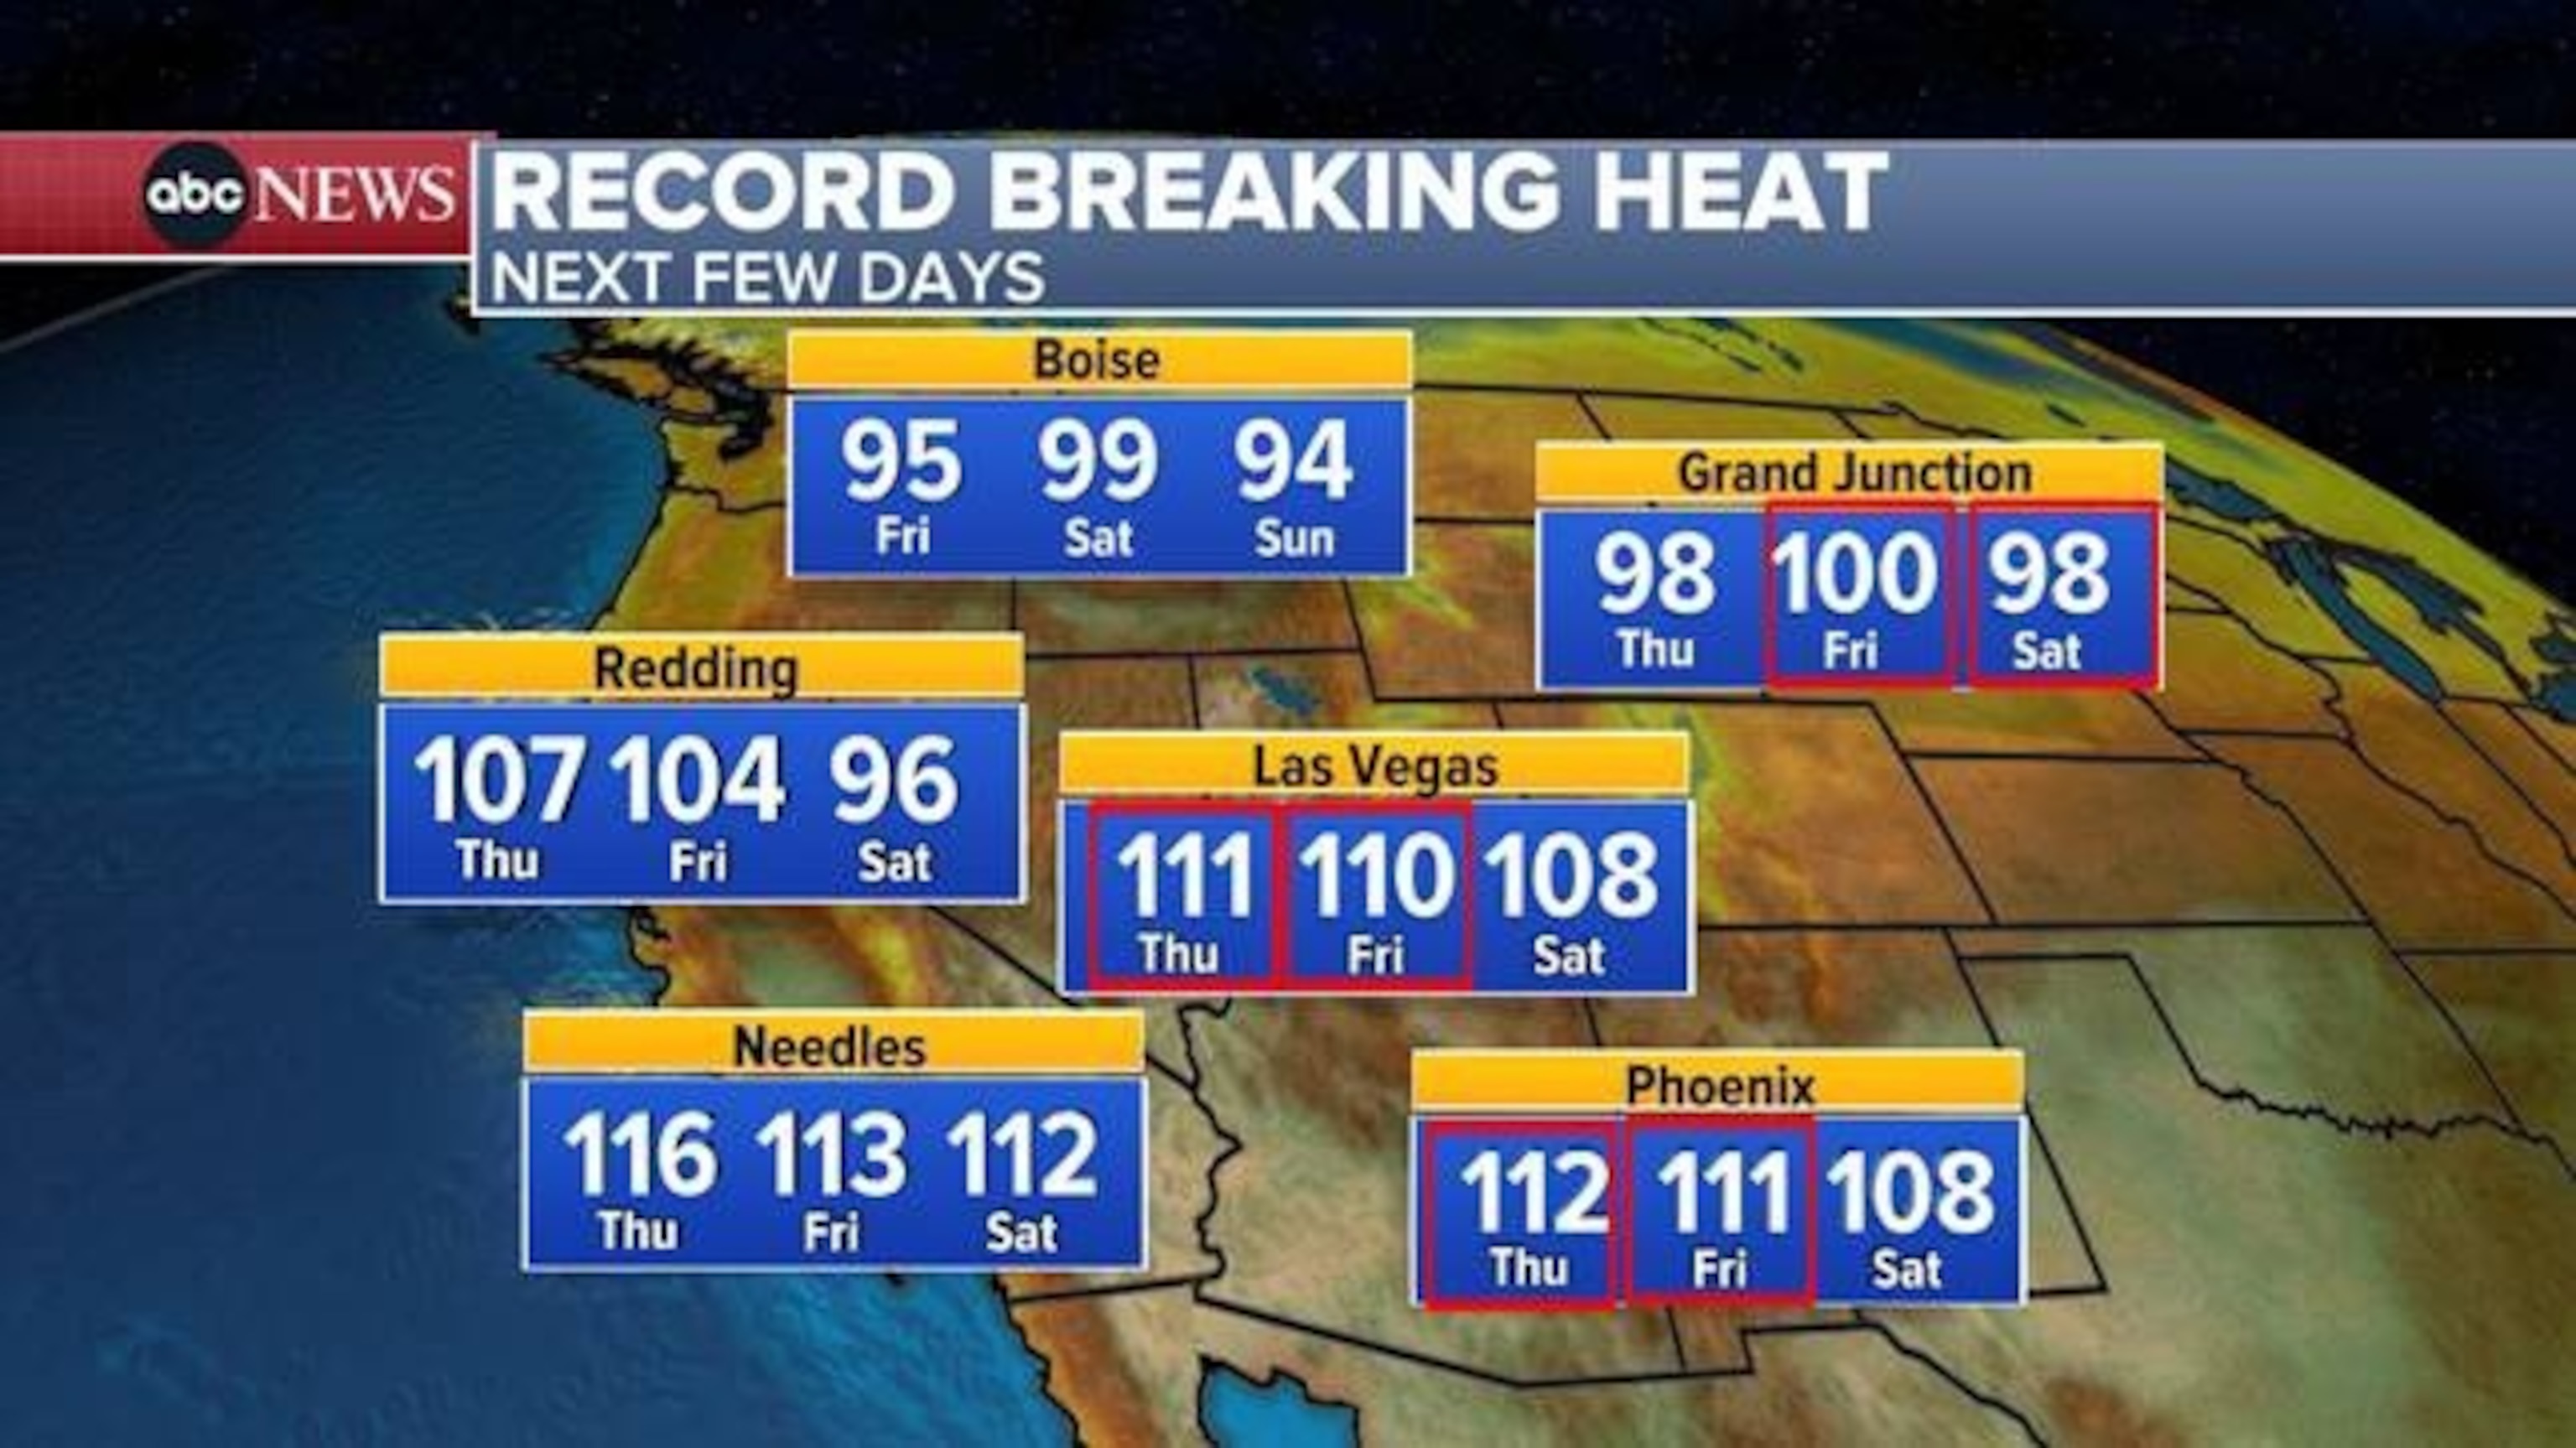 PHOTO: Record Breaking Heat Map